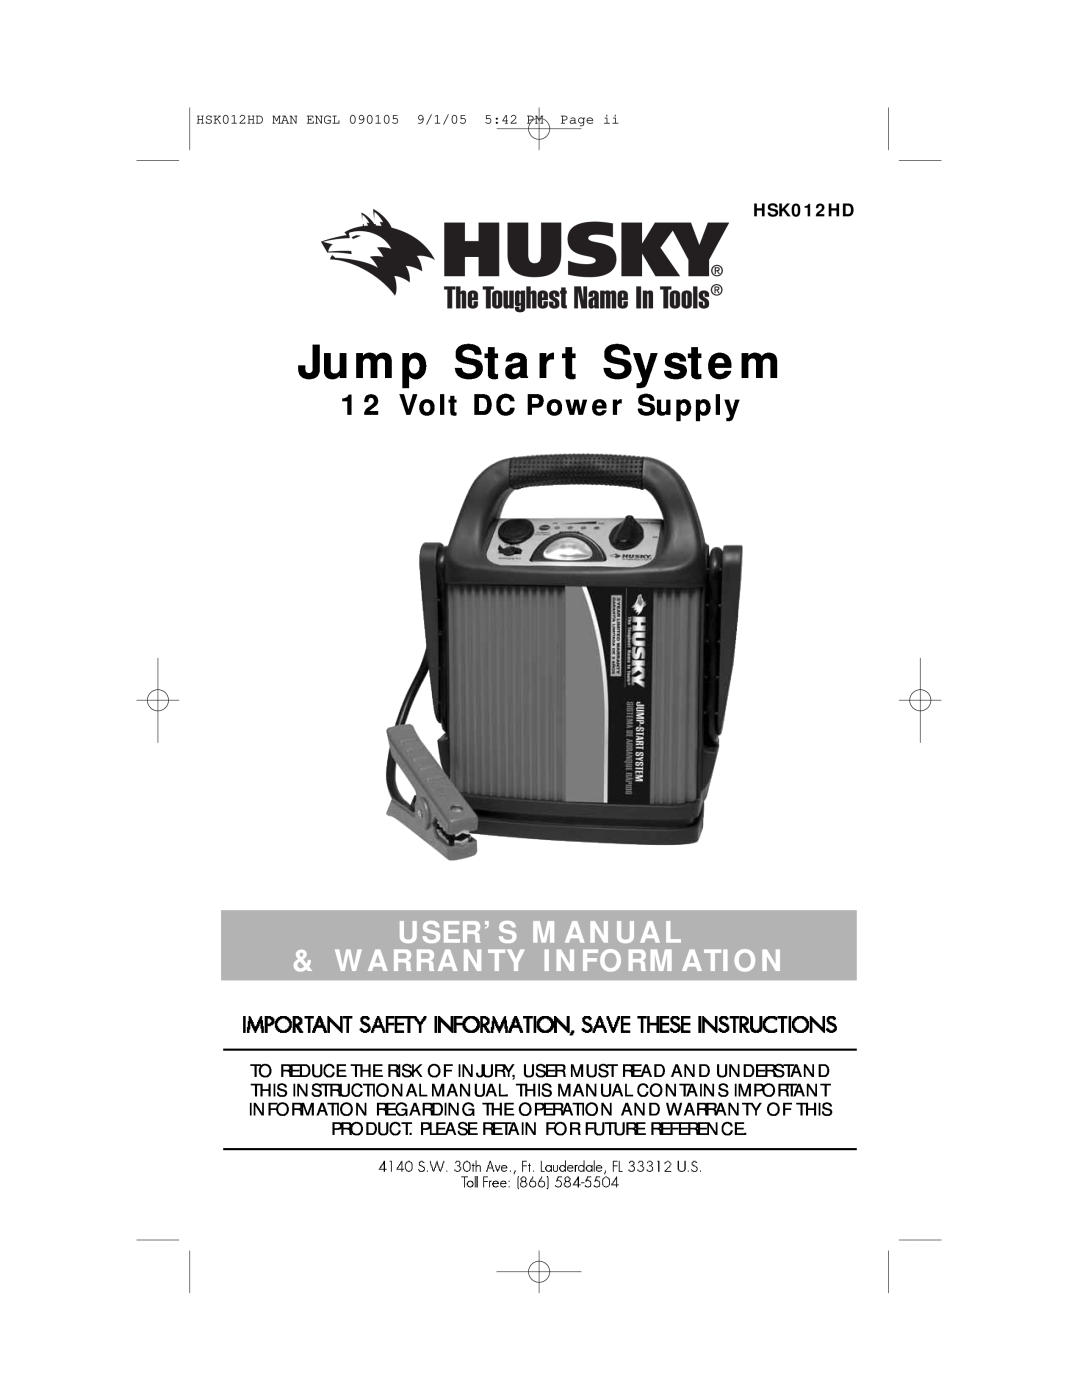 Husky HSK012HD manual Jump Start System, User’S Manual Warranty Information, Volt DC Power Supply 